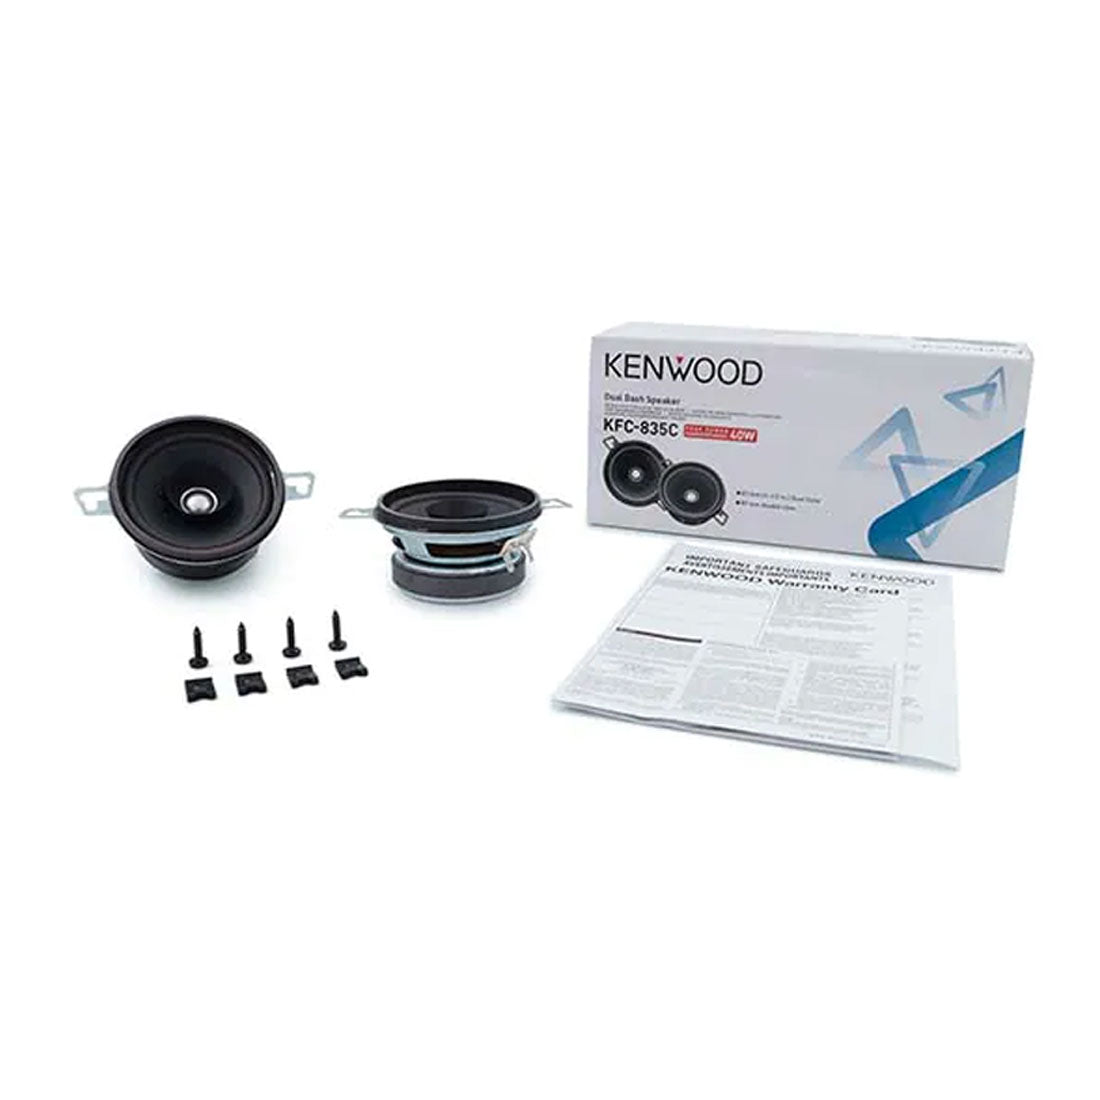 Kenwood KFC-835C 3.5" Round Speaker System